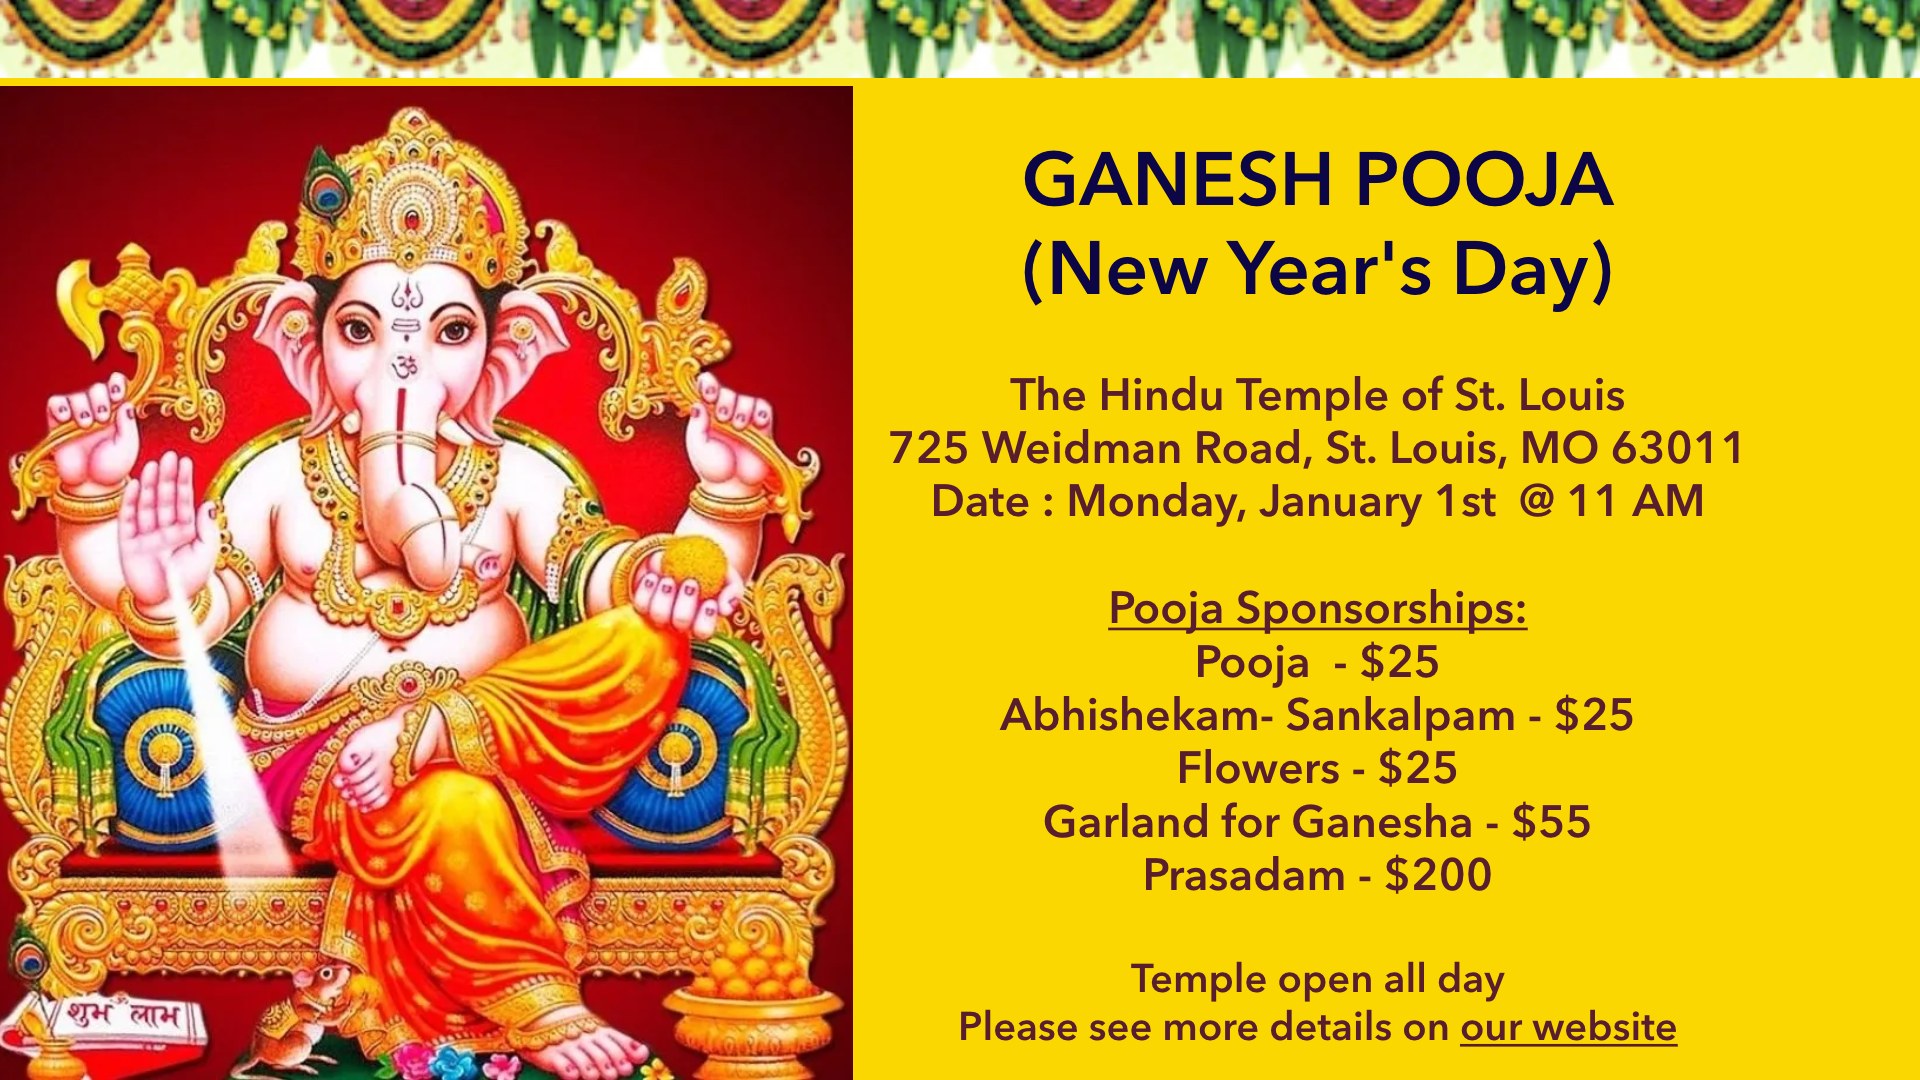 Ganesh Pooja (New Year's Day)